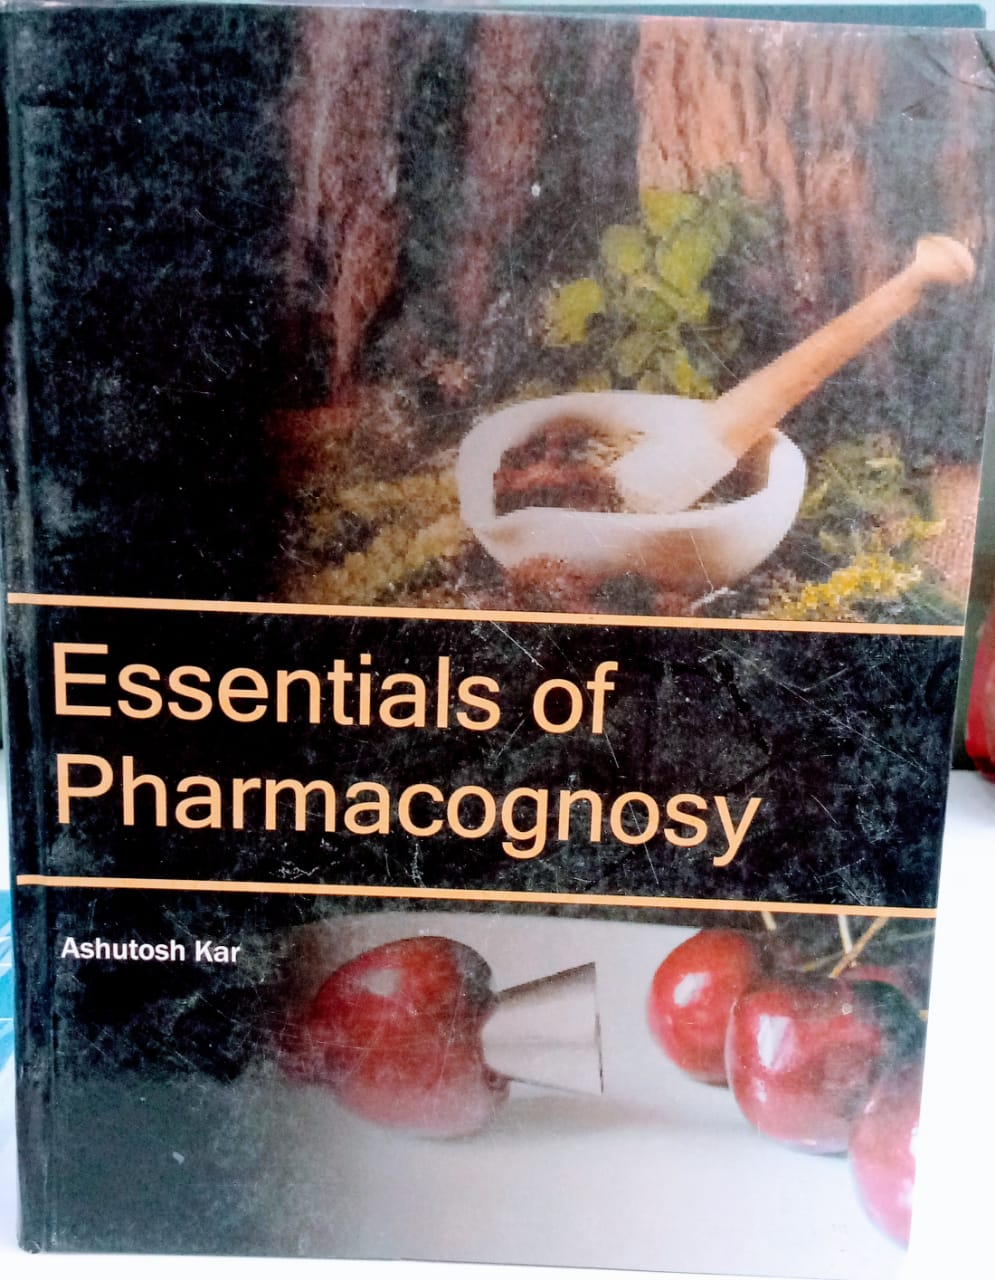 basic-sciences/pharmacology/essentials-of-pharmacognosy--9789380316284